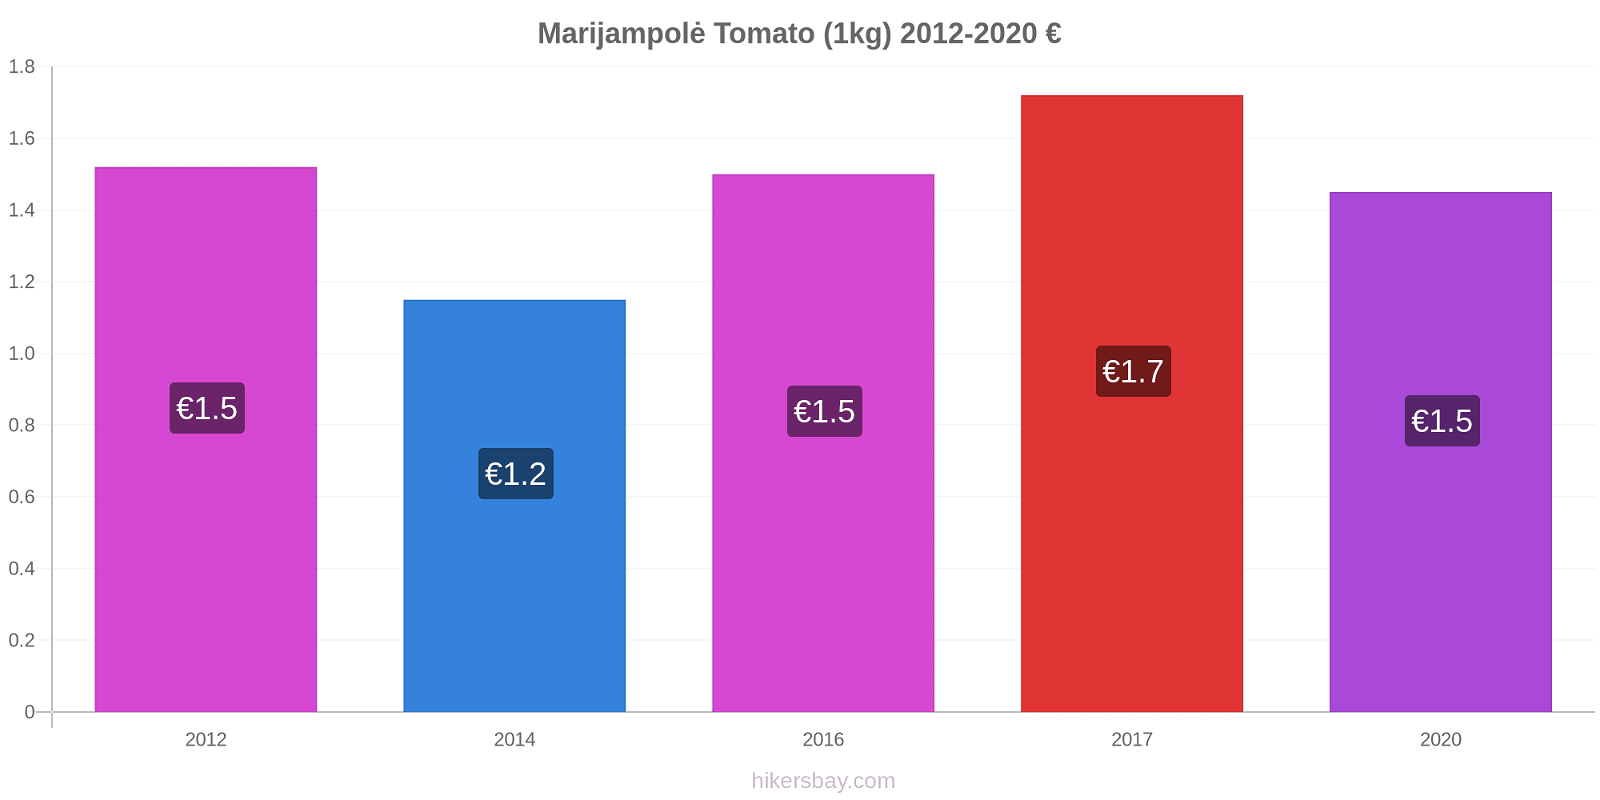 Marijampolė price changes Tomato (1kg) hikersbay.com